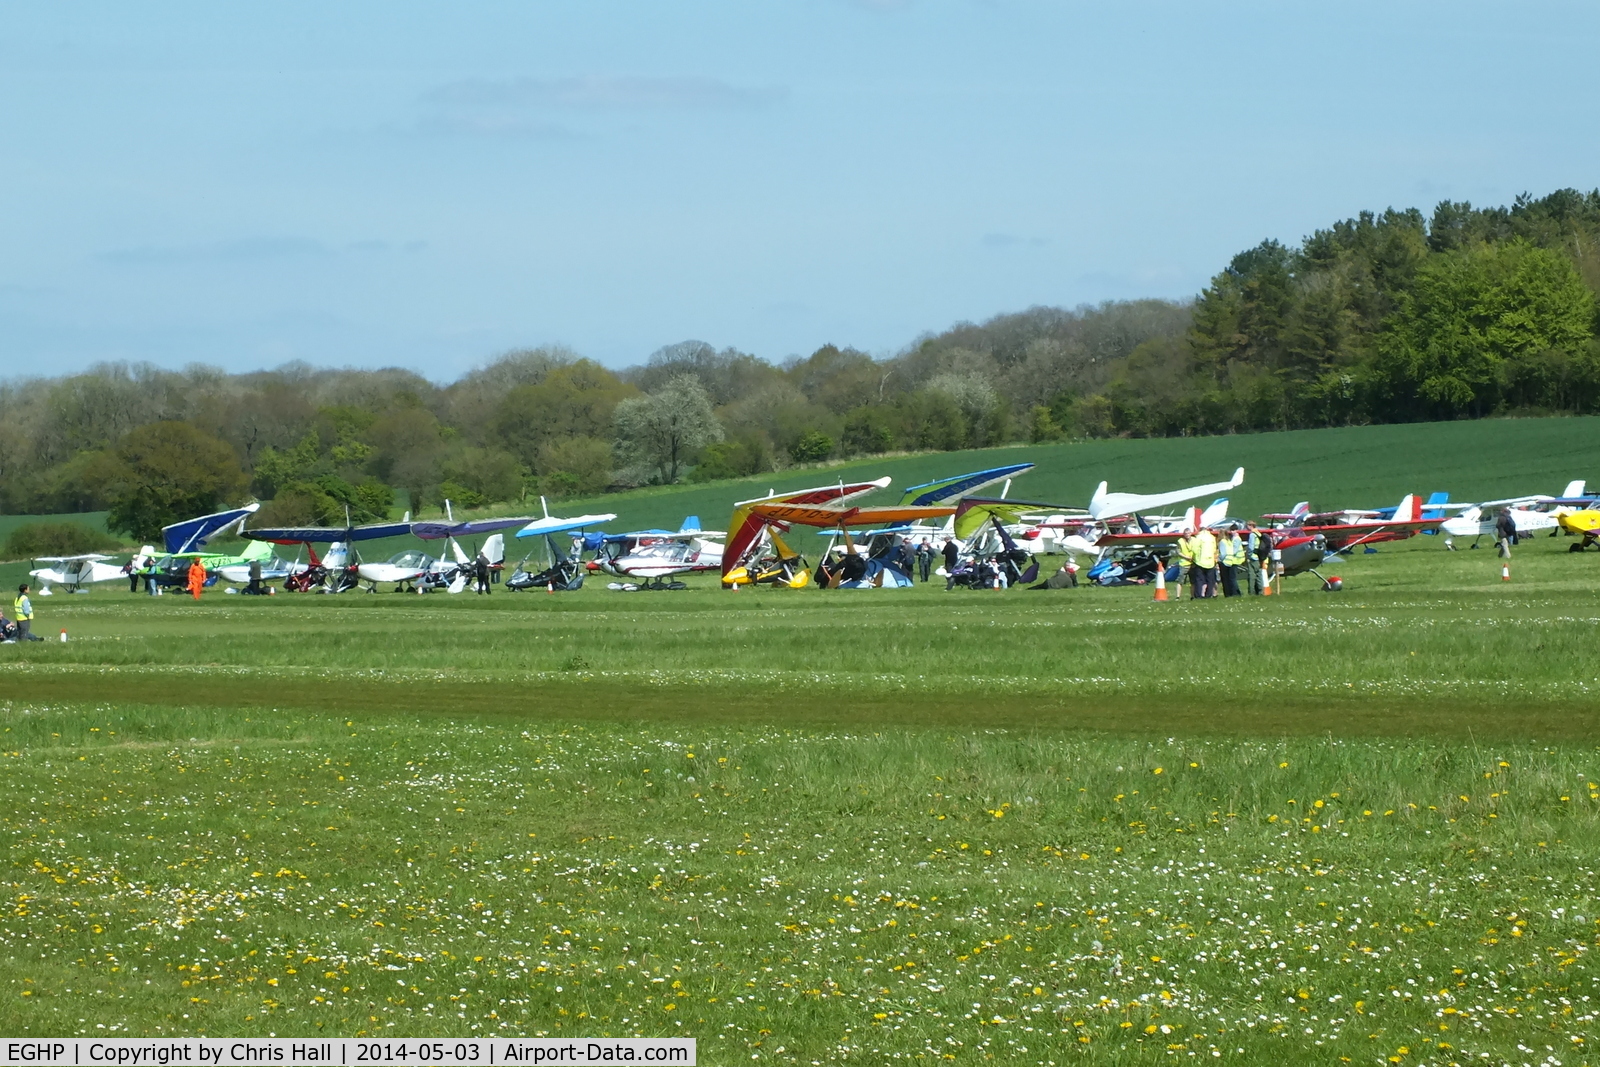 Popham Airfield Airport, Popham, England United Kingdom (EGHP) - 2014 Microlight Trade Fair, Popham